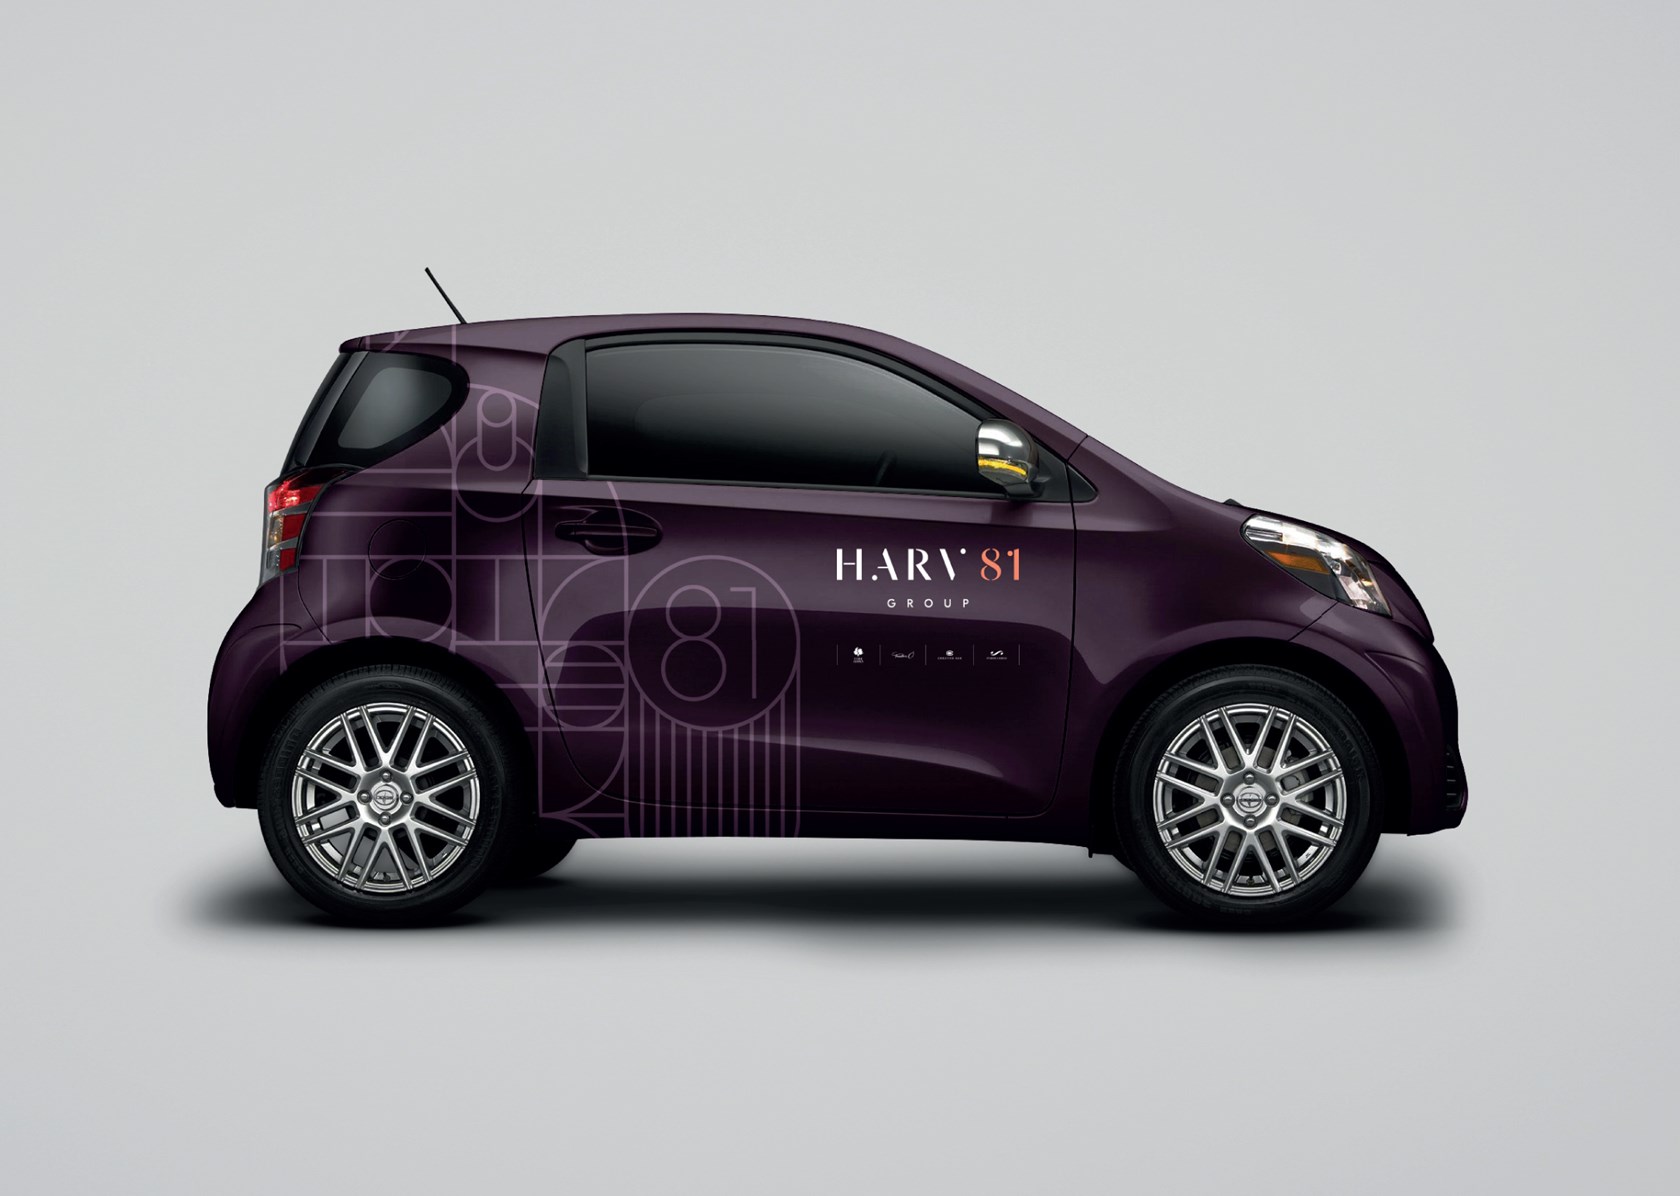 HARV 81 Group — Branding the partners of the most demanding winemakers